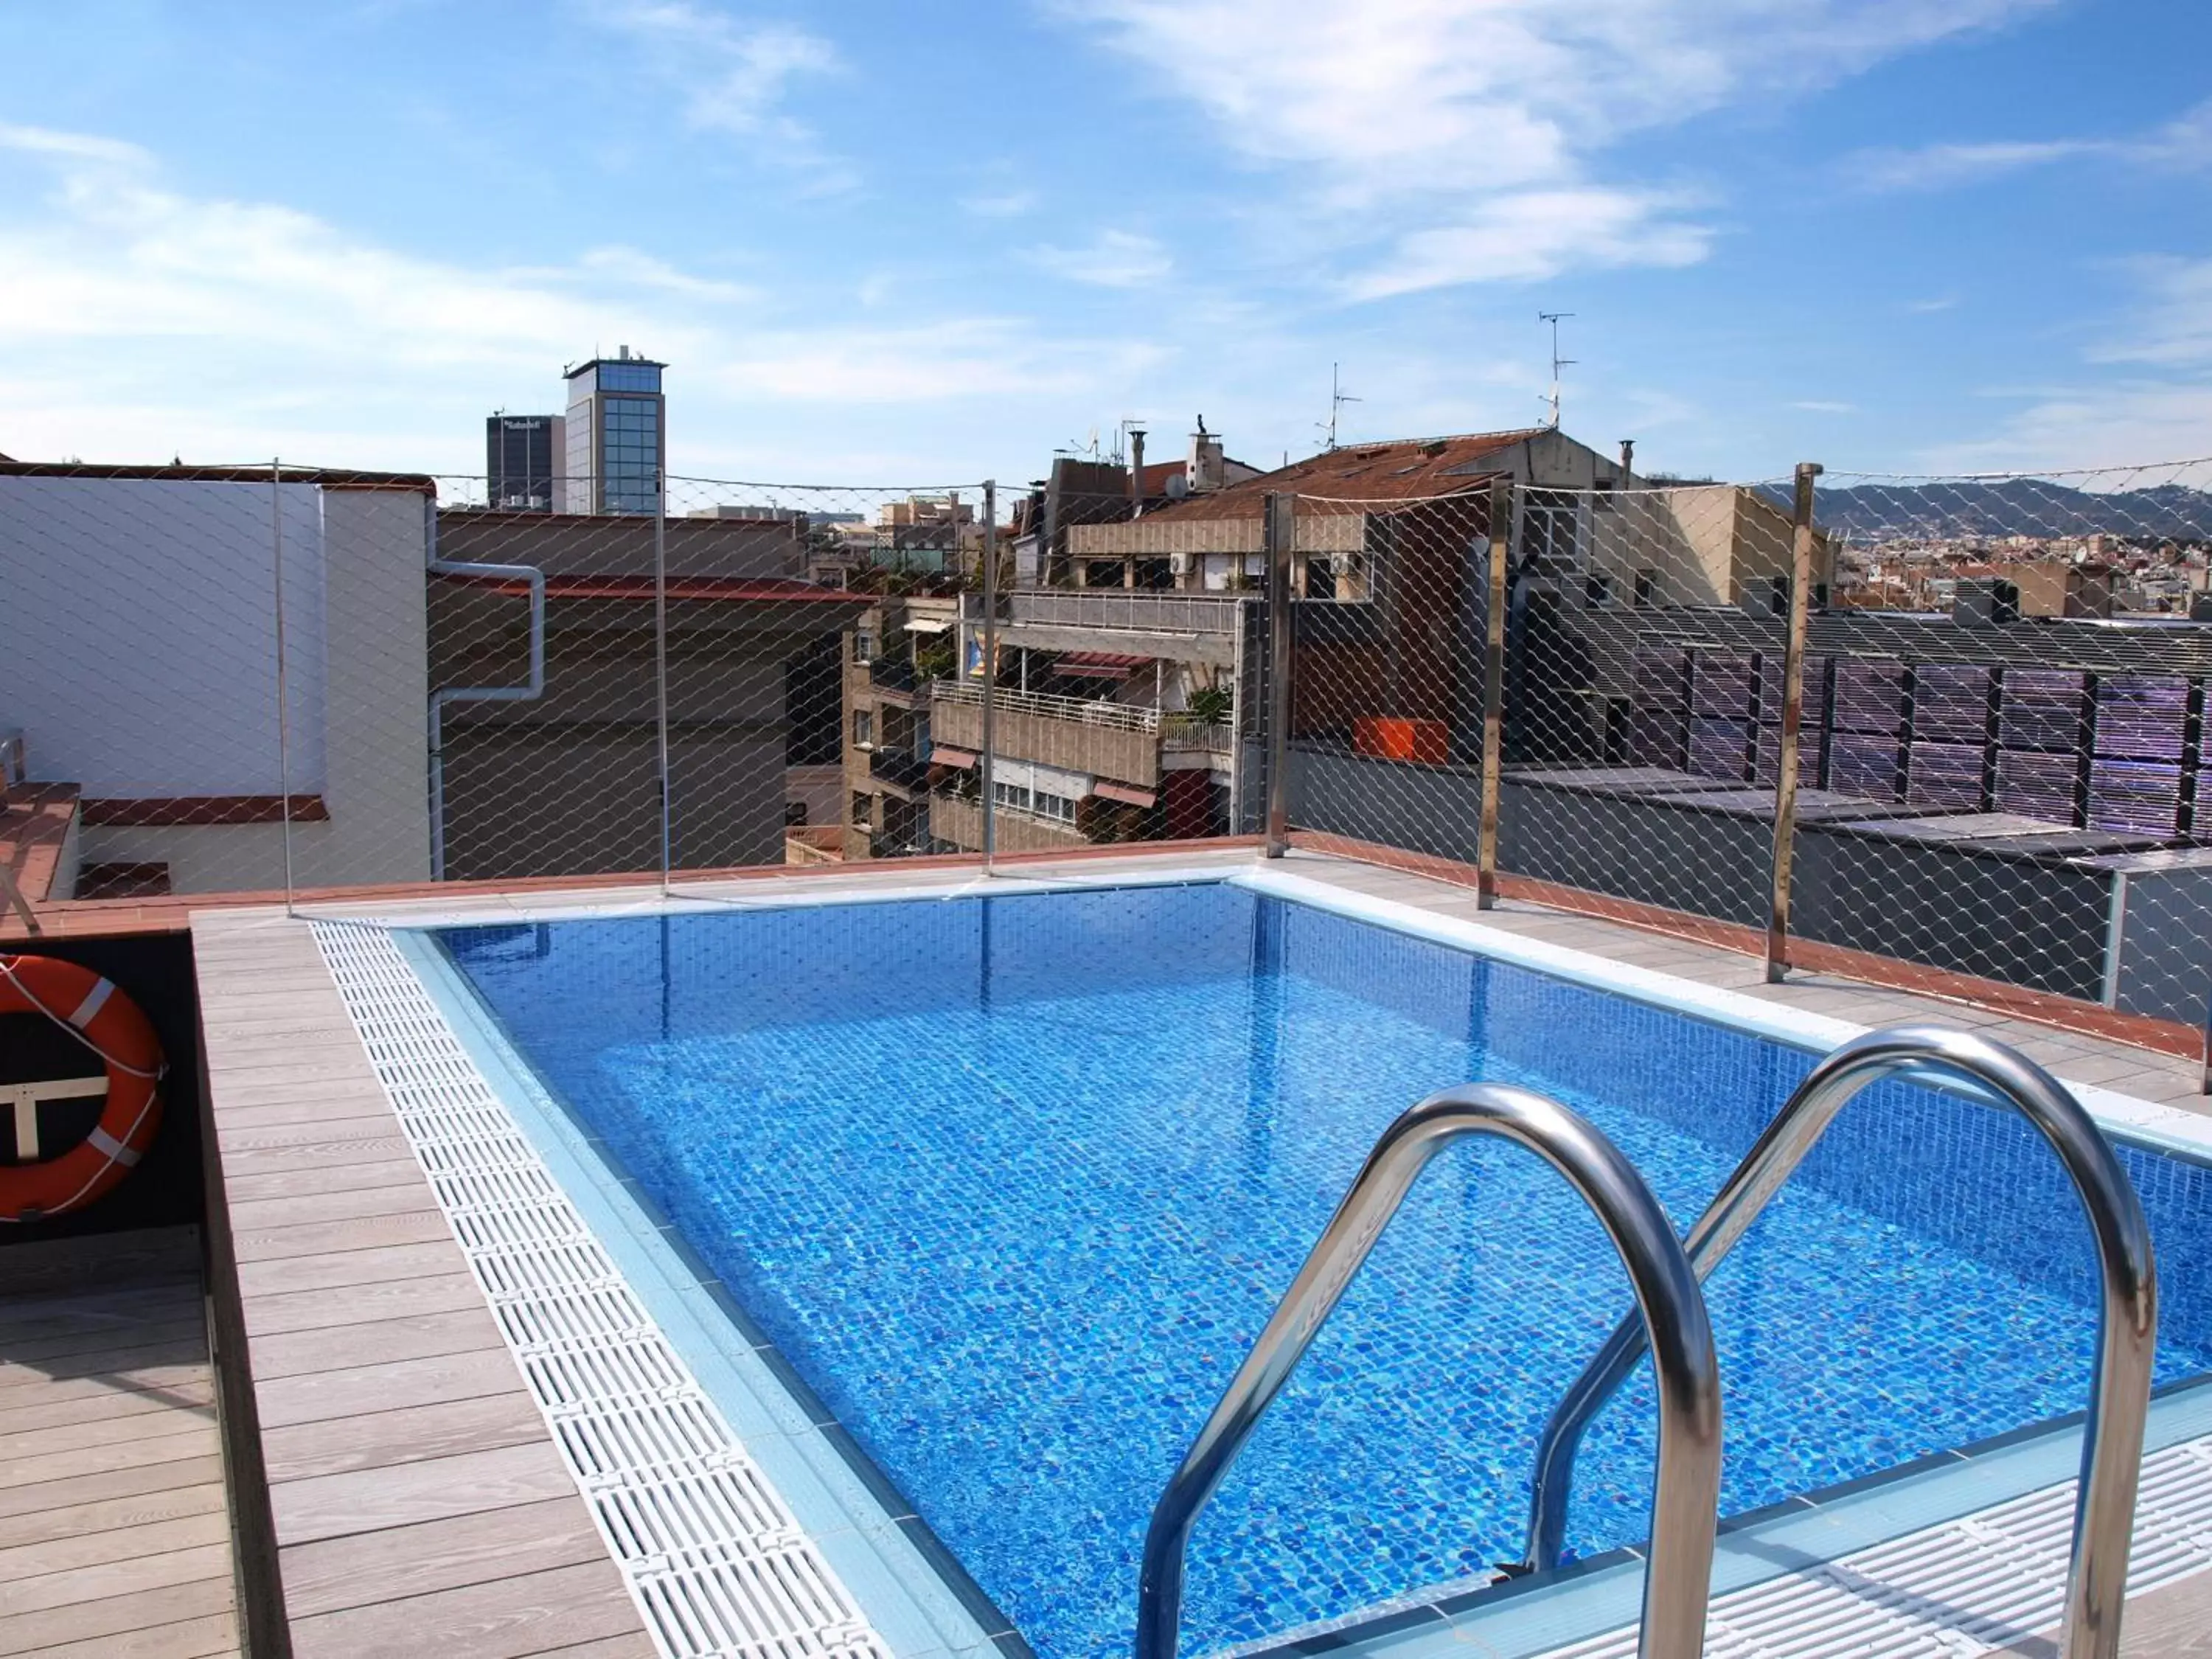 Swimming Pool in Catalonia Gracia